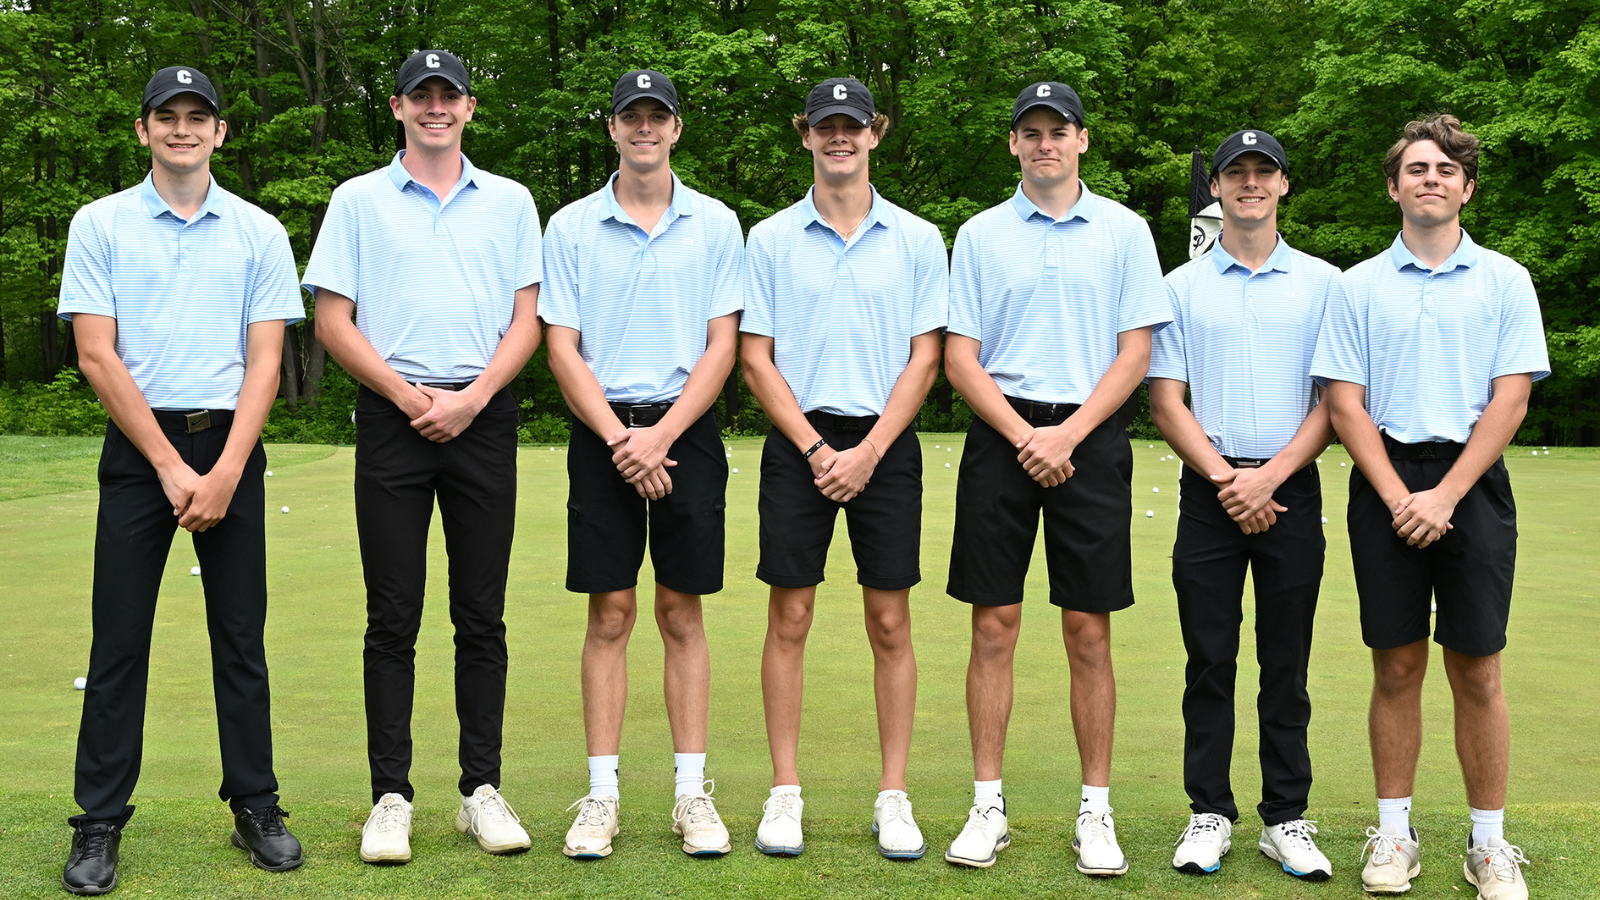 7 Grand Rapids Christian High School boys golf seniors standing together.